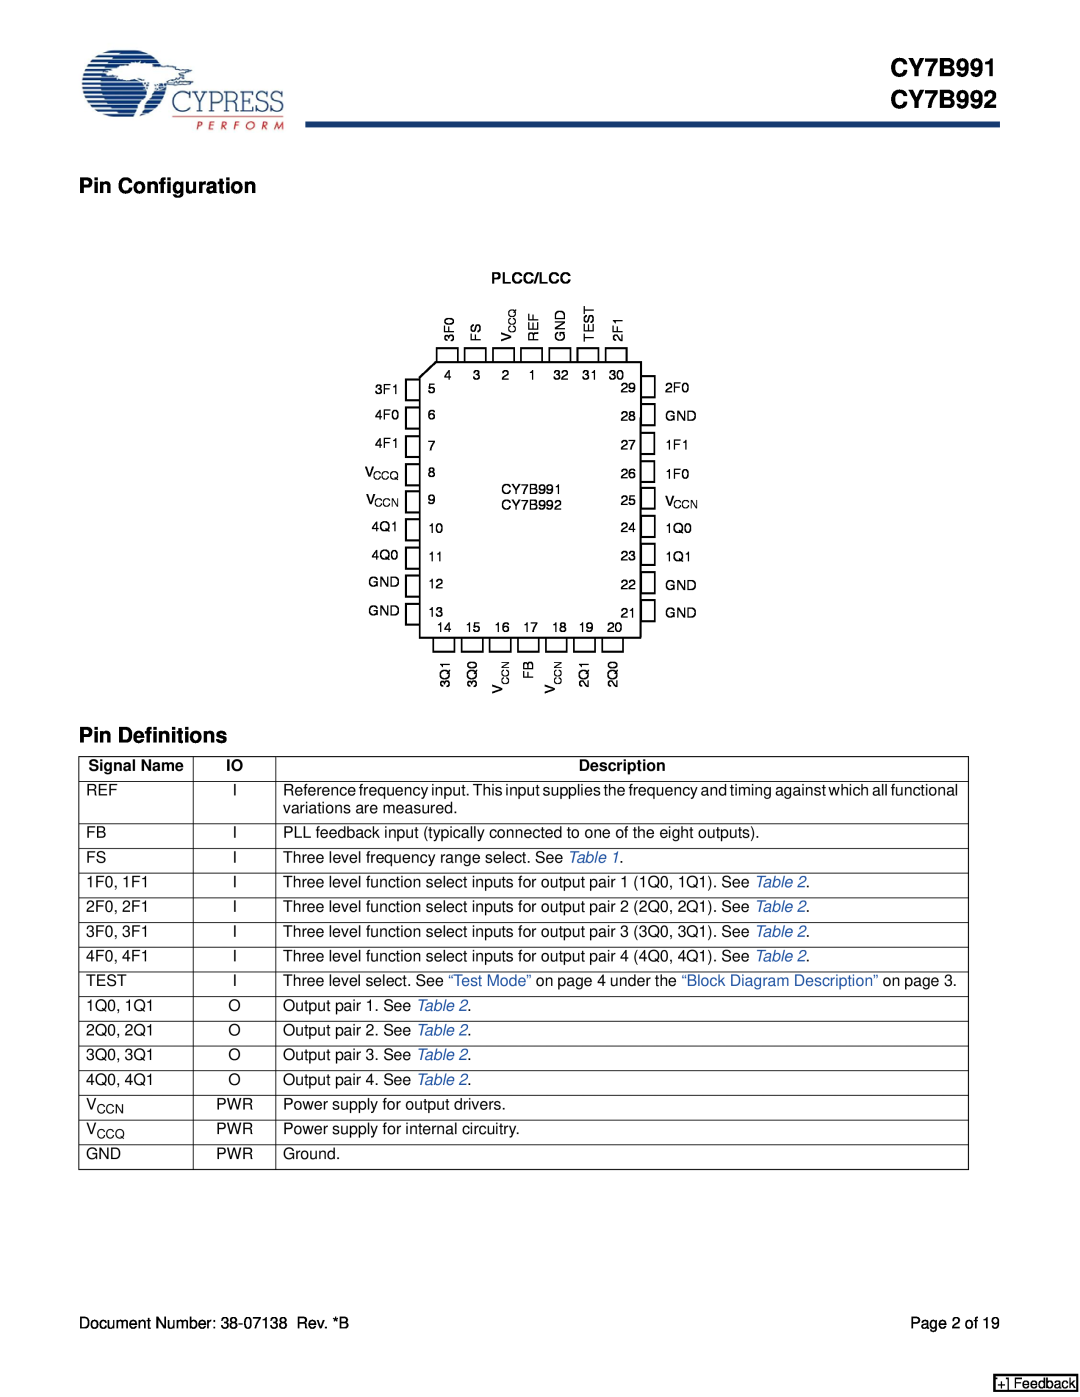 Cypress manual Pin Configuration, Pin Definitions, Plcc/Lcc, Signal Name, Description, CY7B991 CY7B992 